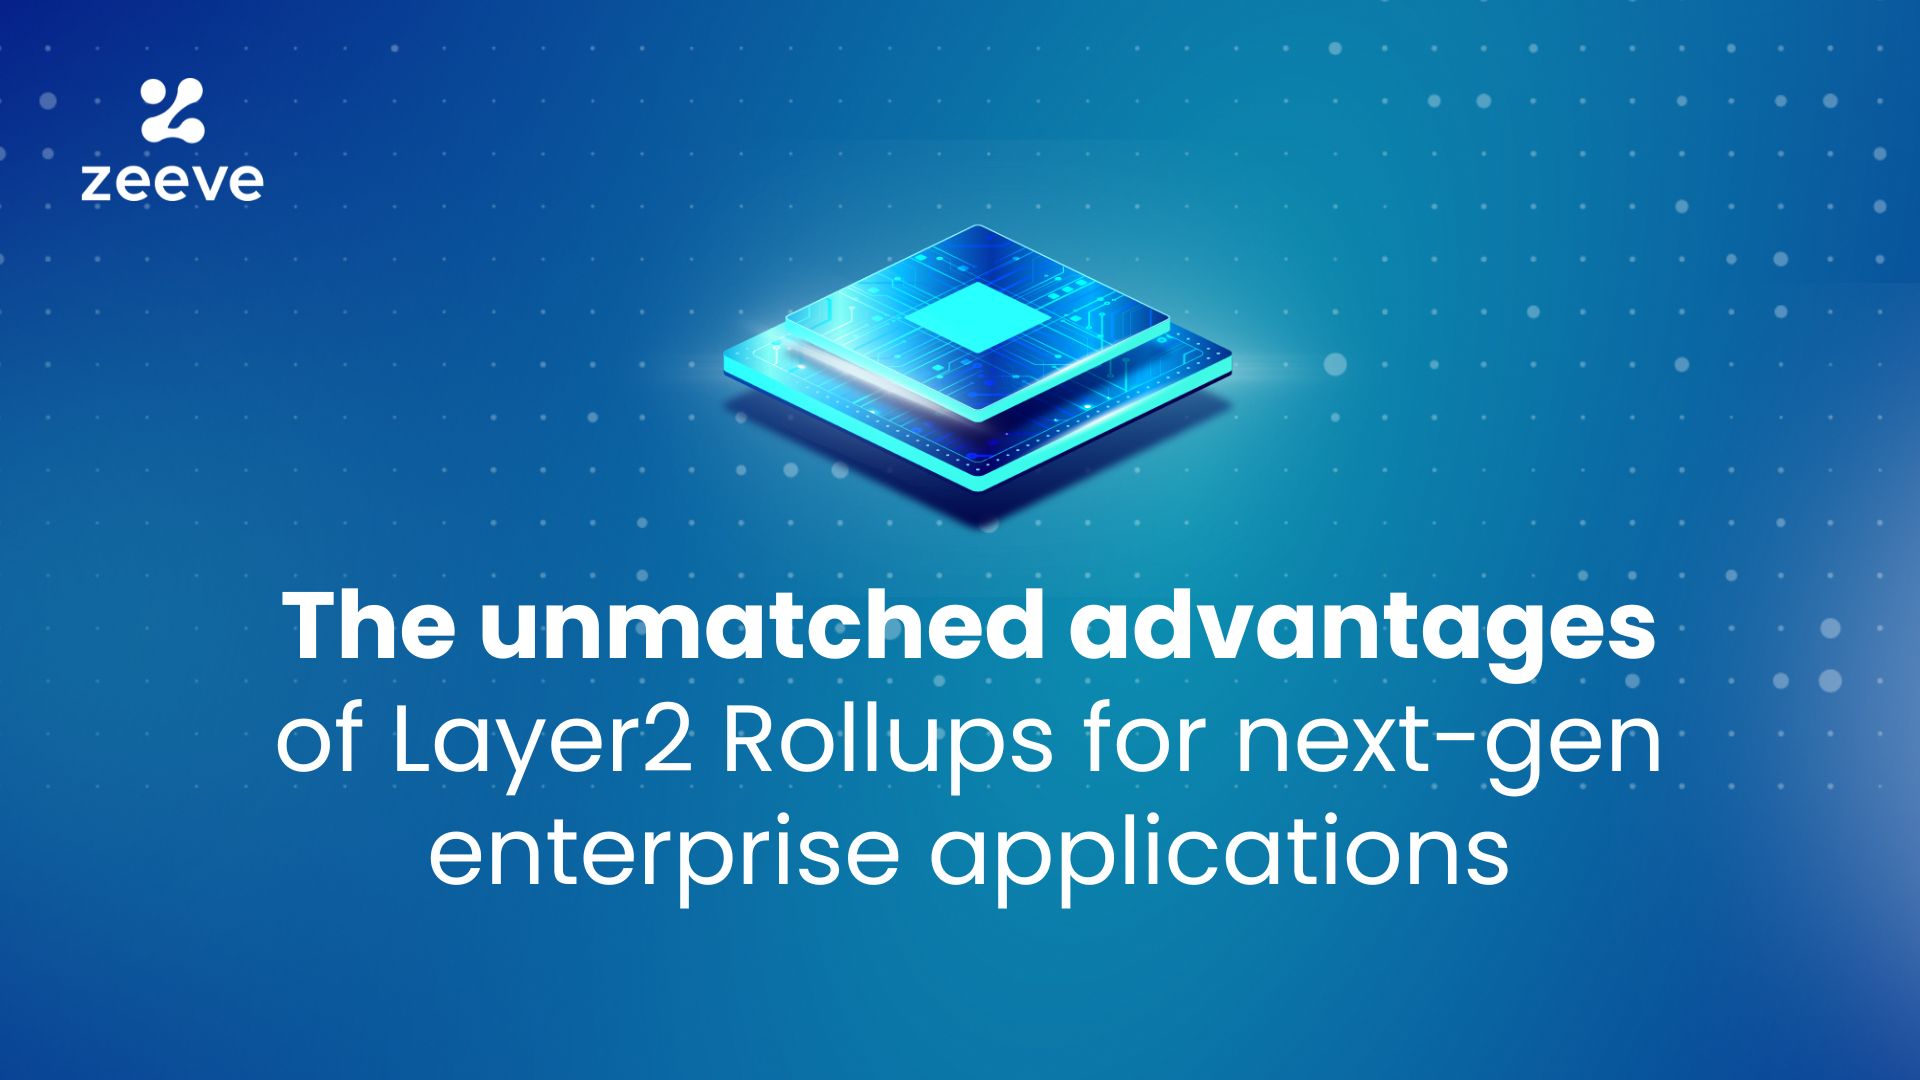 Rollups for enterprise applications